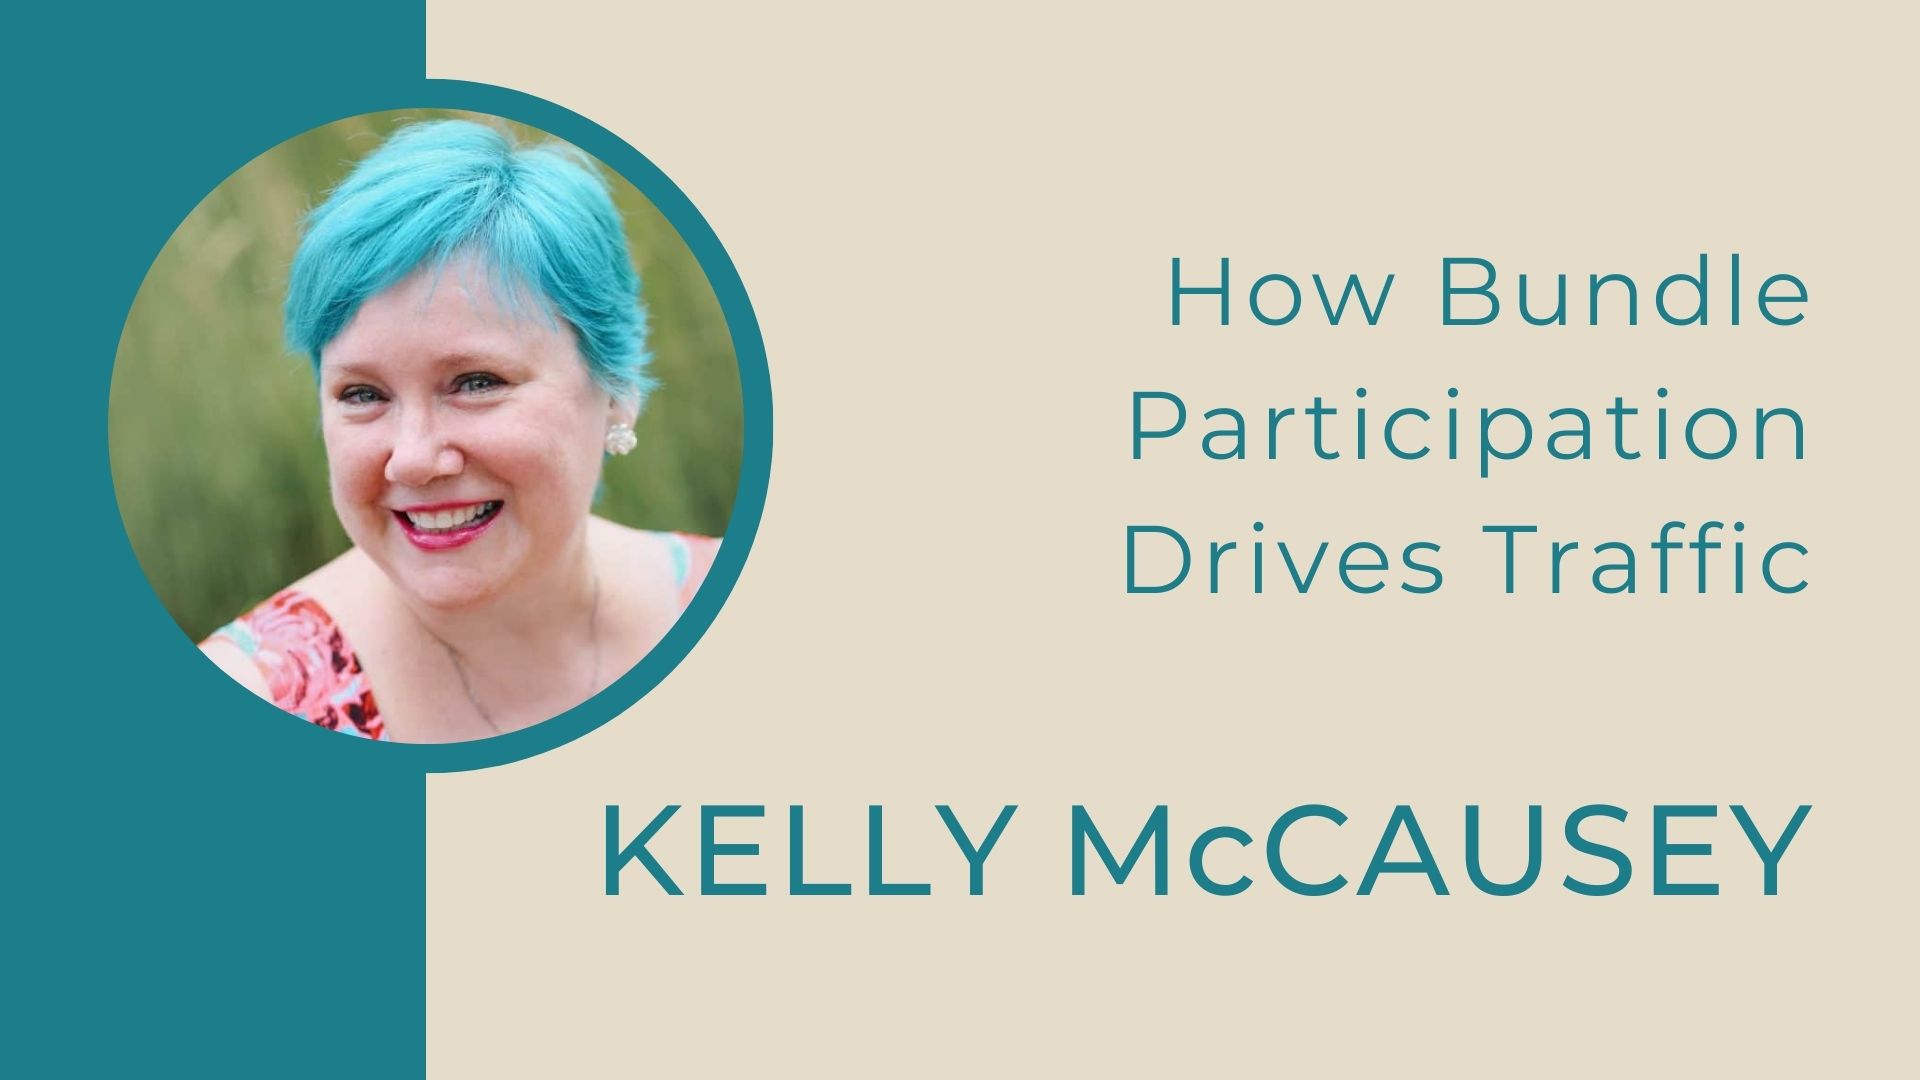 Kelly McCausey drive traffic with bundles